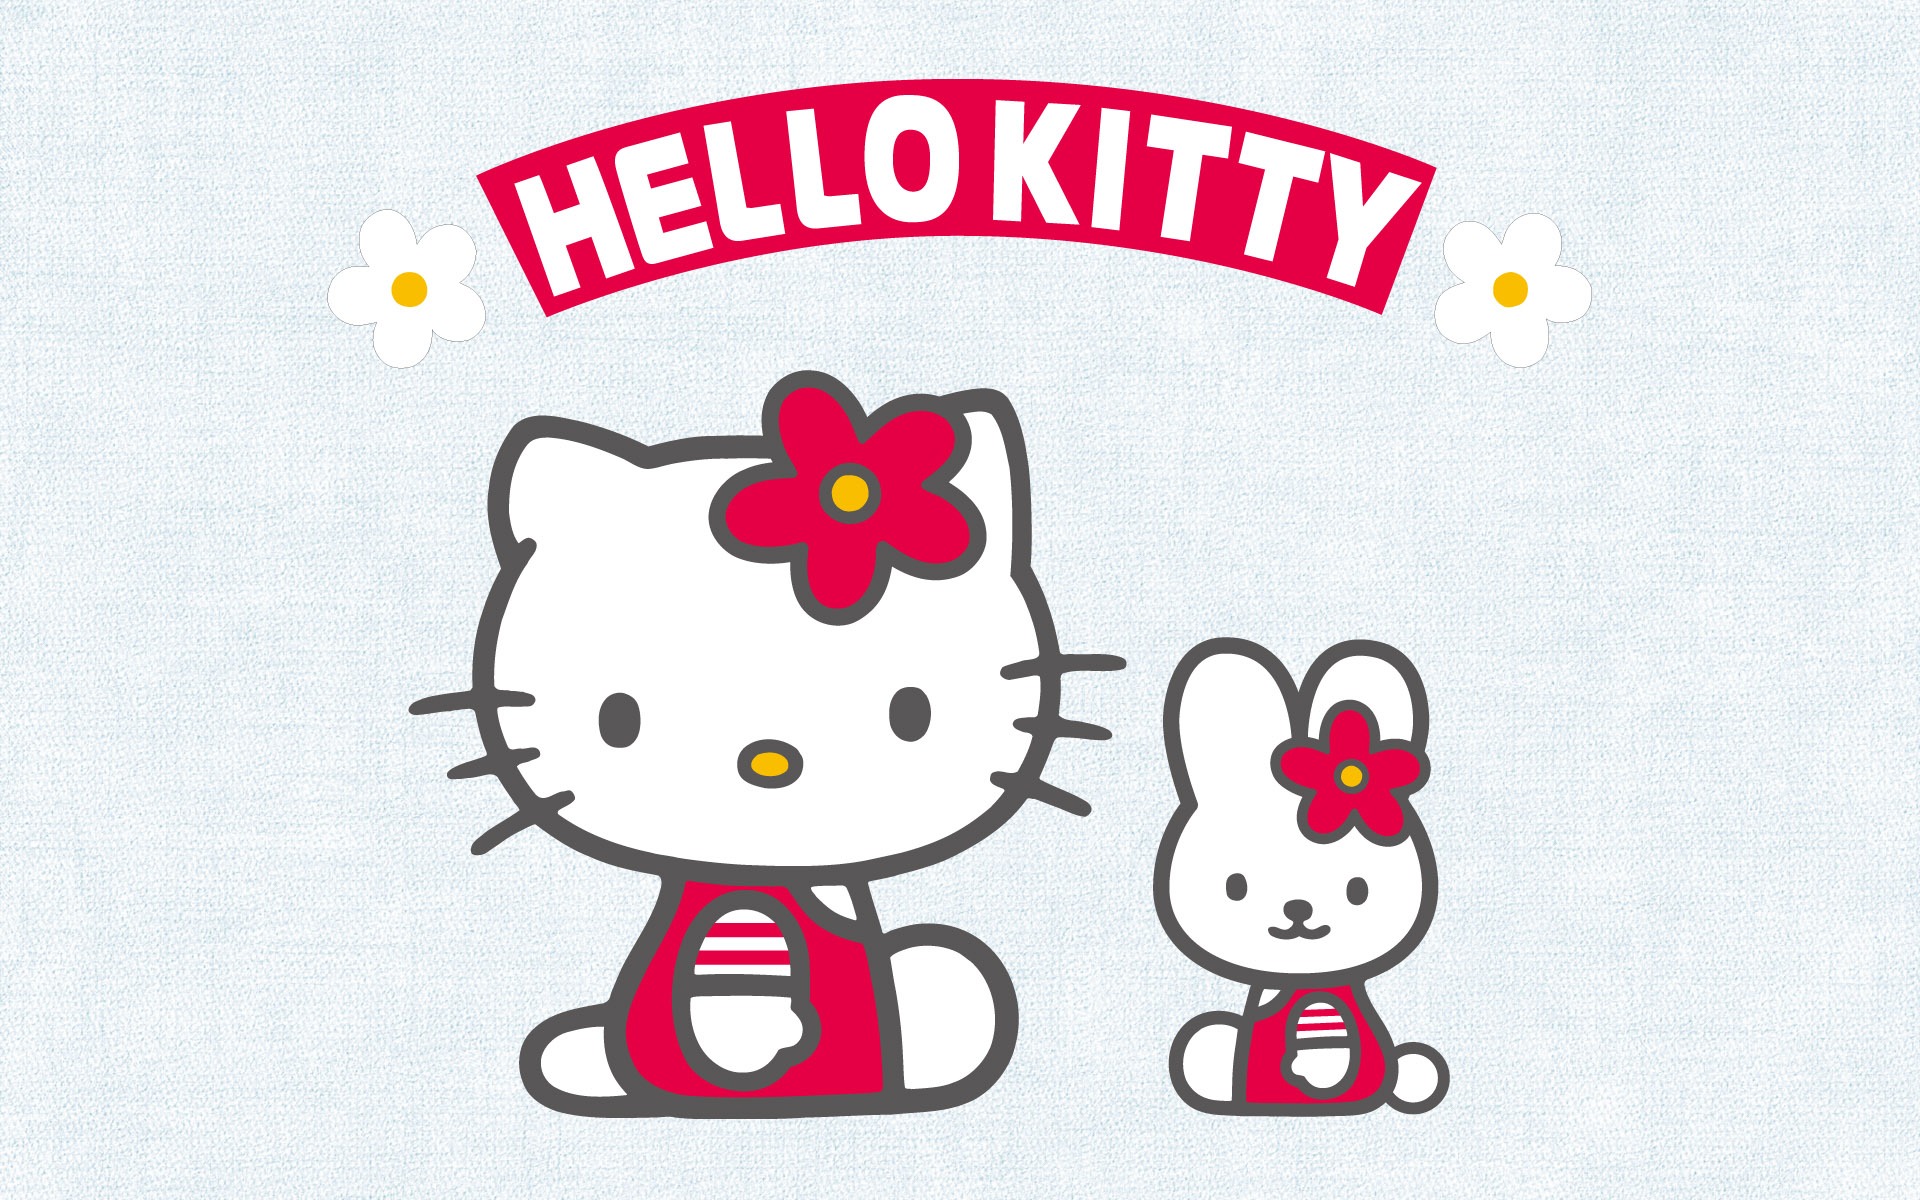 Hello Kitty - Hello Kitty Wallpaper (26269930) - Fanpop